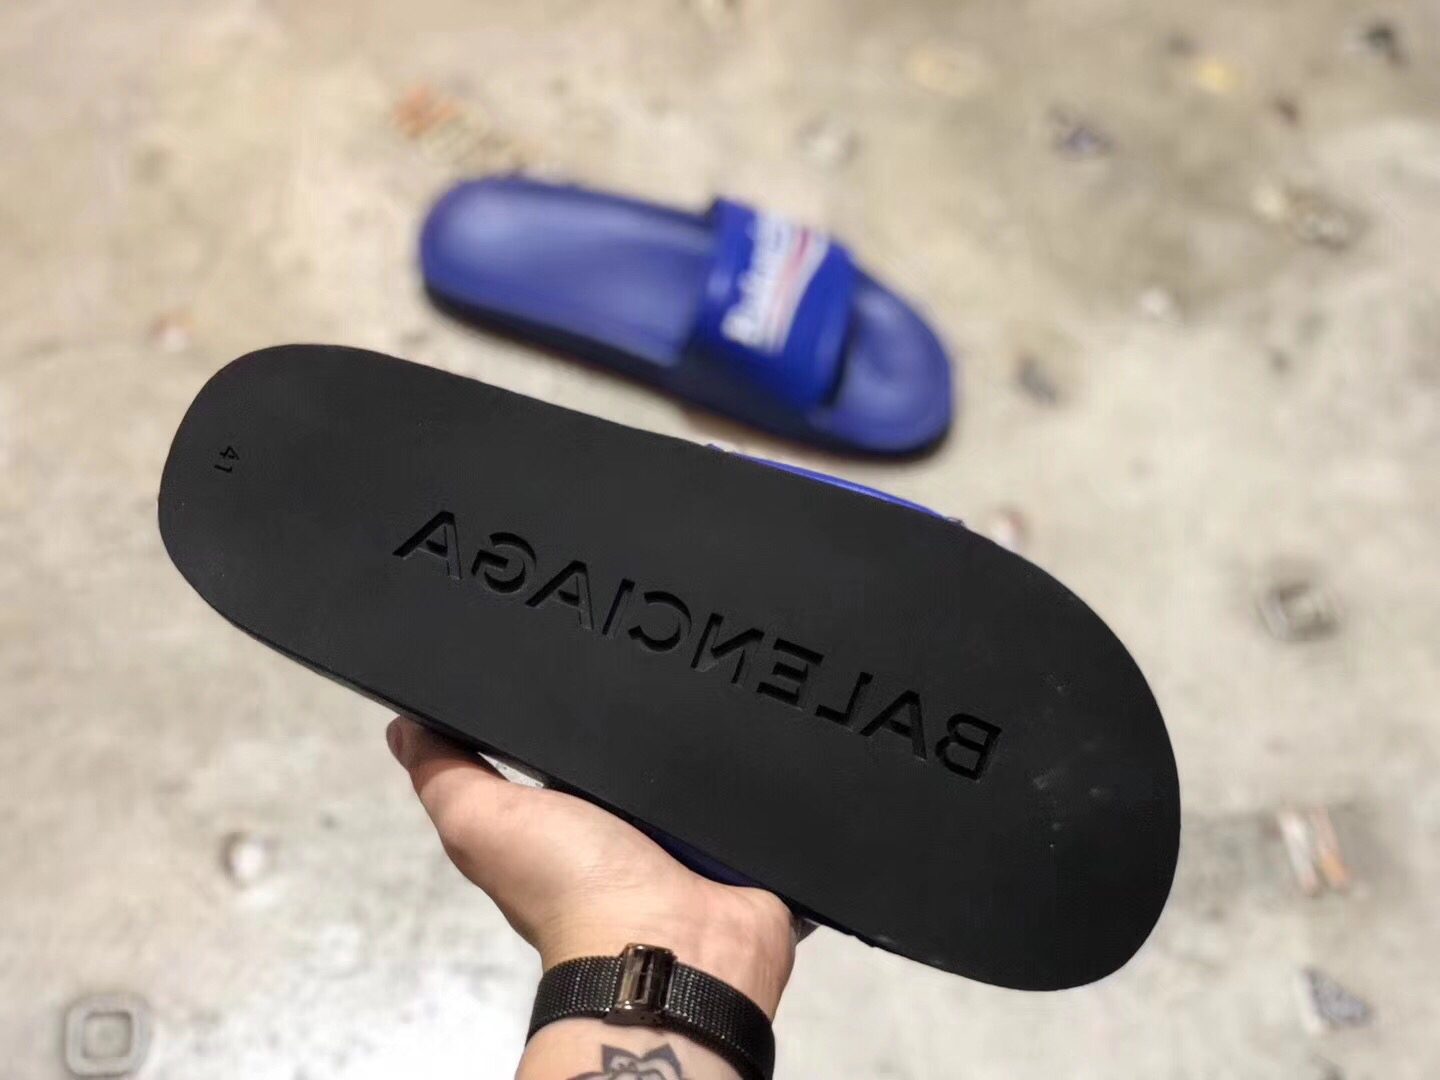 High Quality Balenciaga slide sandal BL007